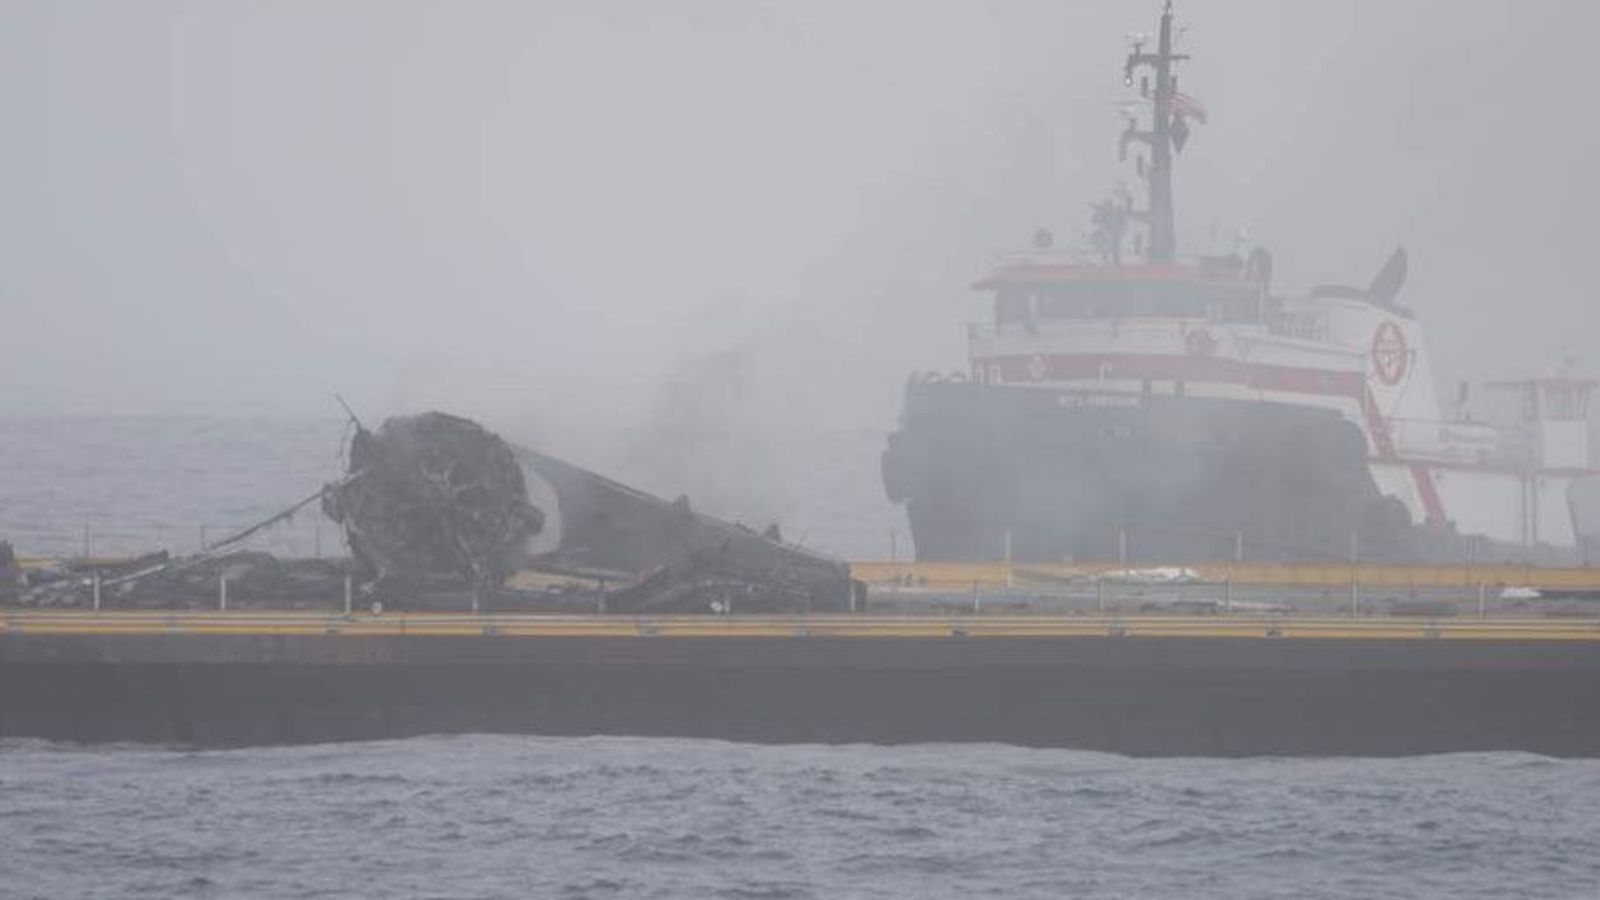 Foto: La primera etapa del Falcon 9 reposa sobre la barcaza donde intentó el aterrizaje fallido. (SpaceX)